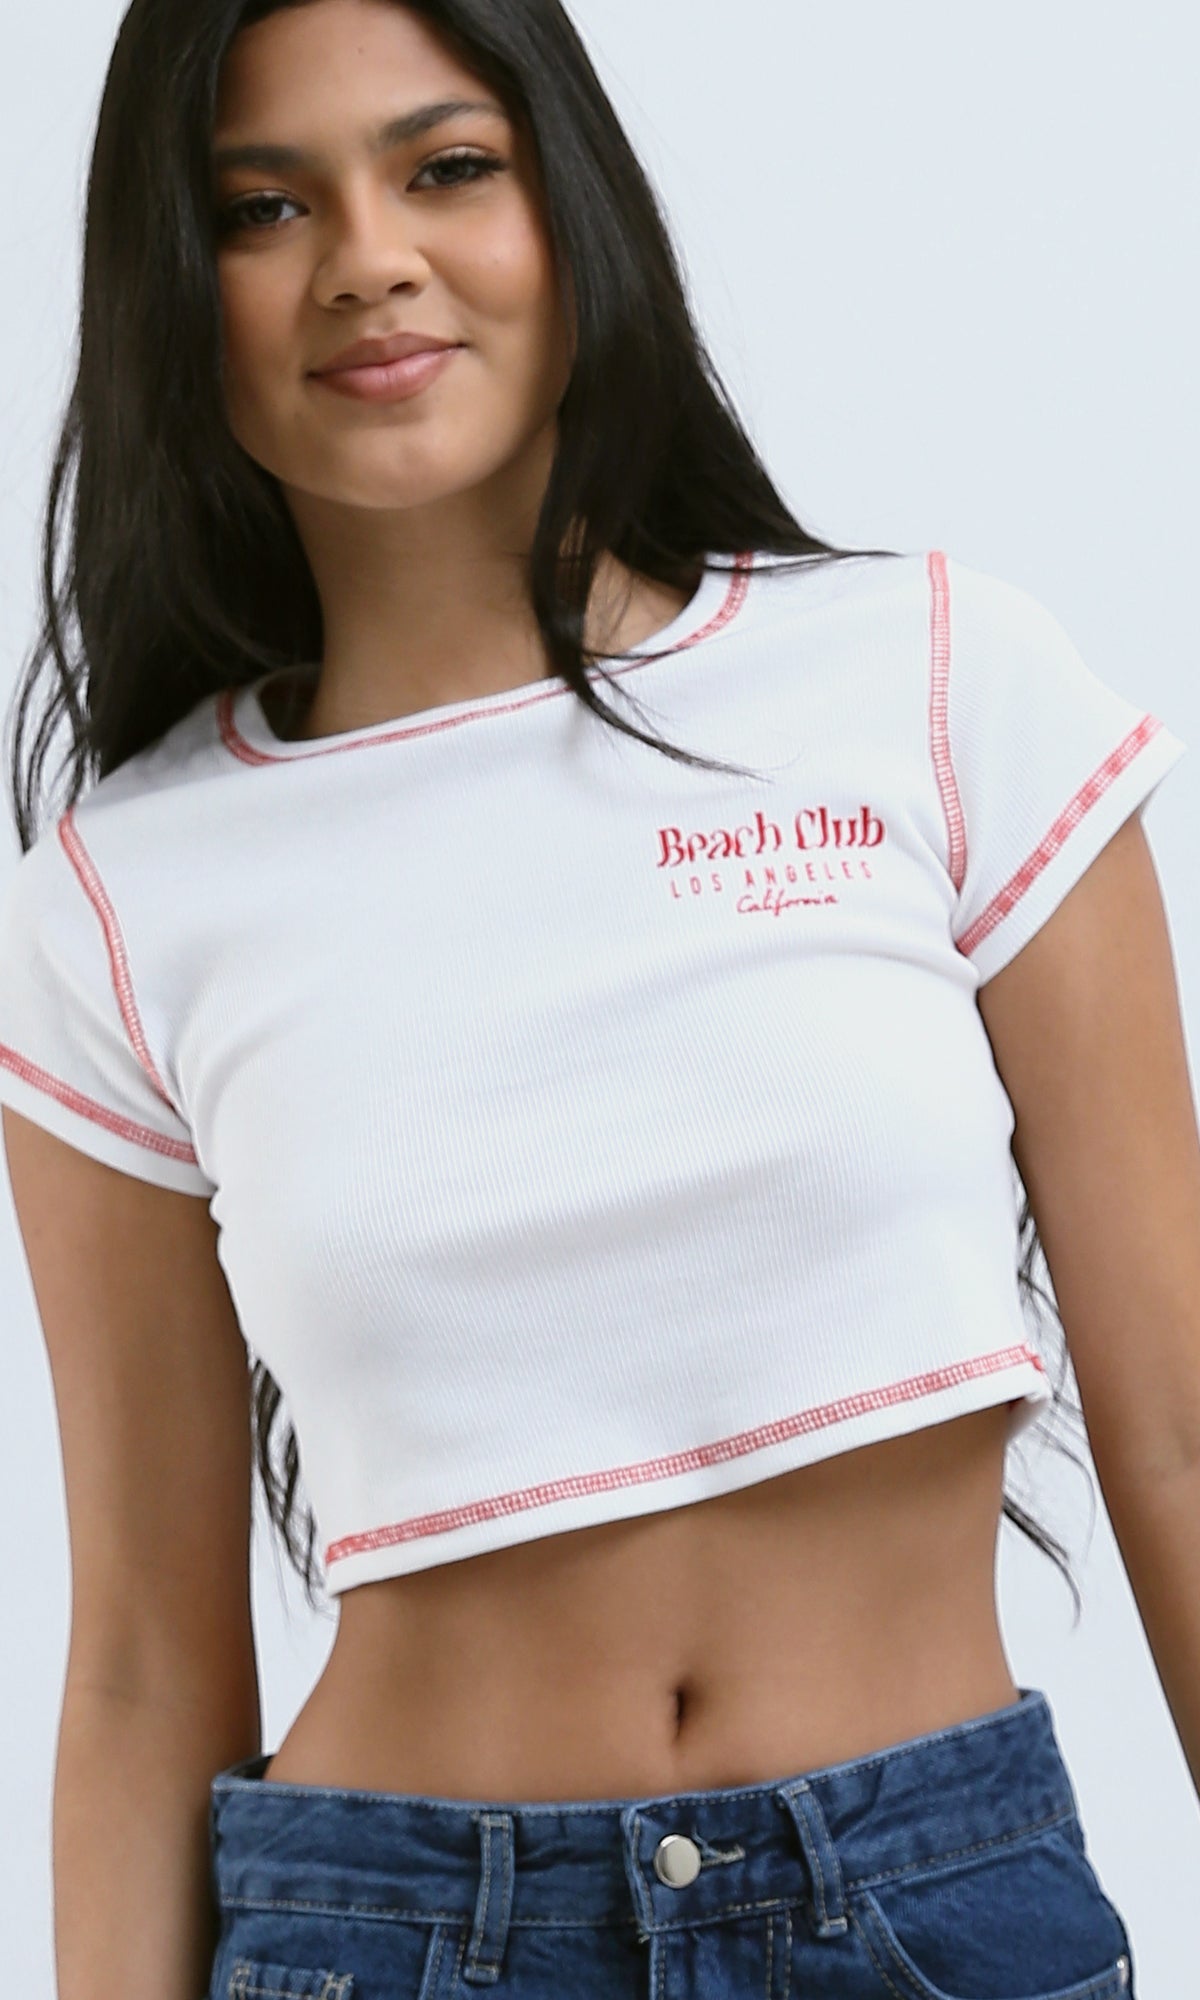 O189748 Printed "Beach Club" Short Sleeves White Cropped Top